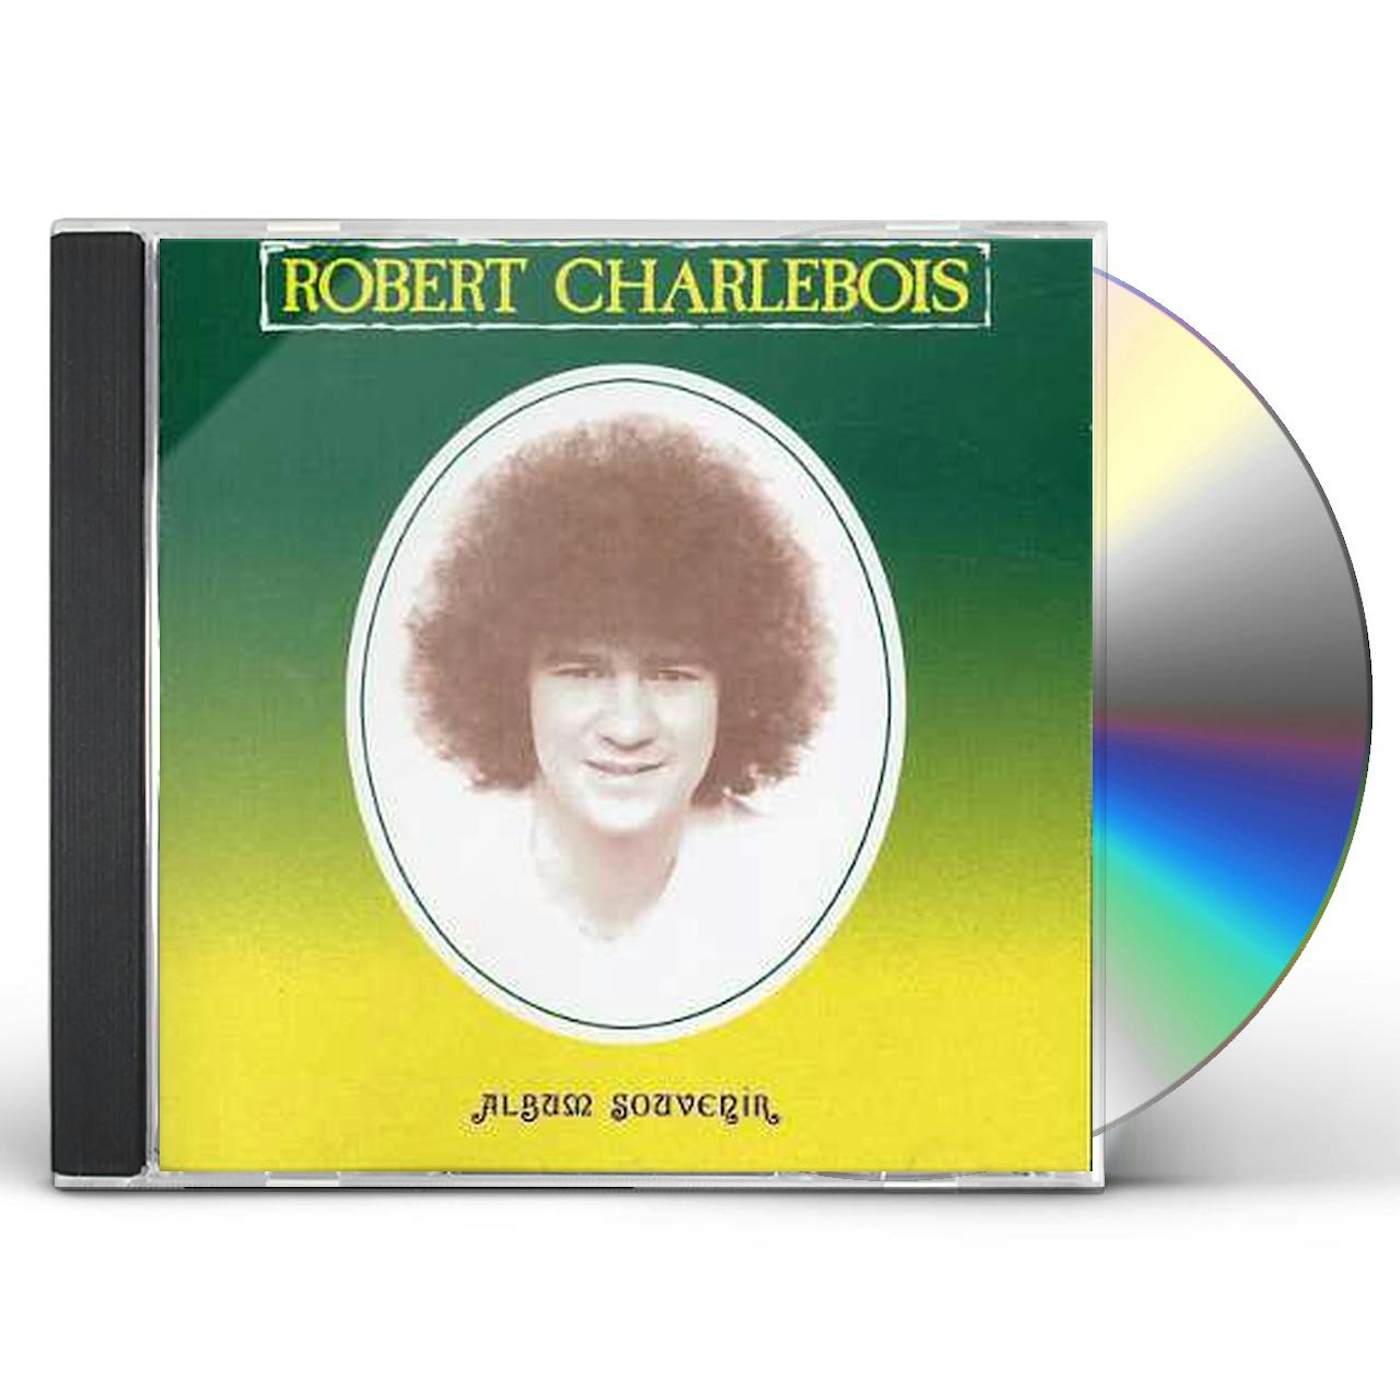 Robert Charlebois ALBUM SOUVENIR CD